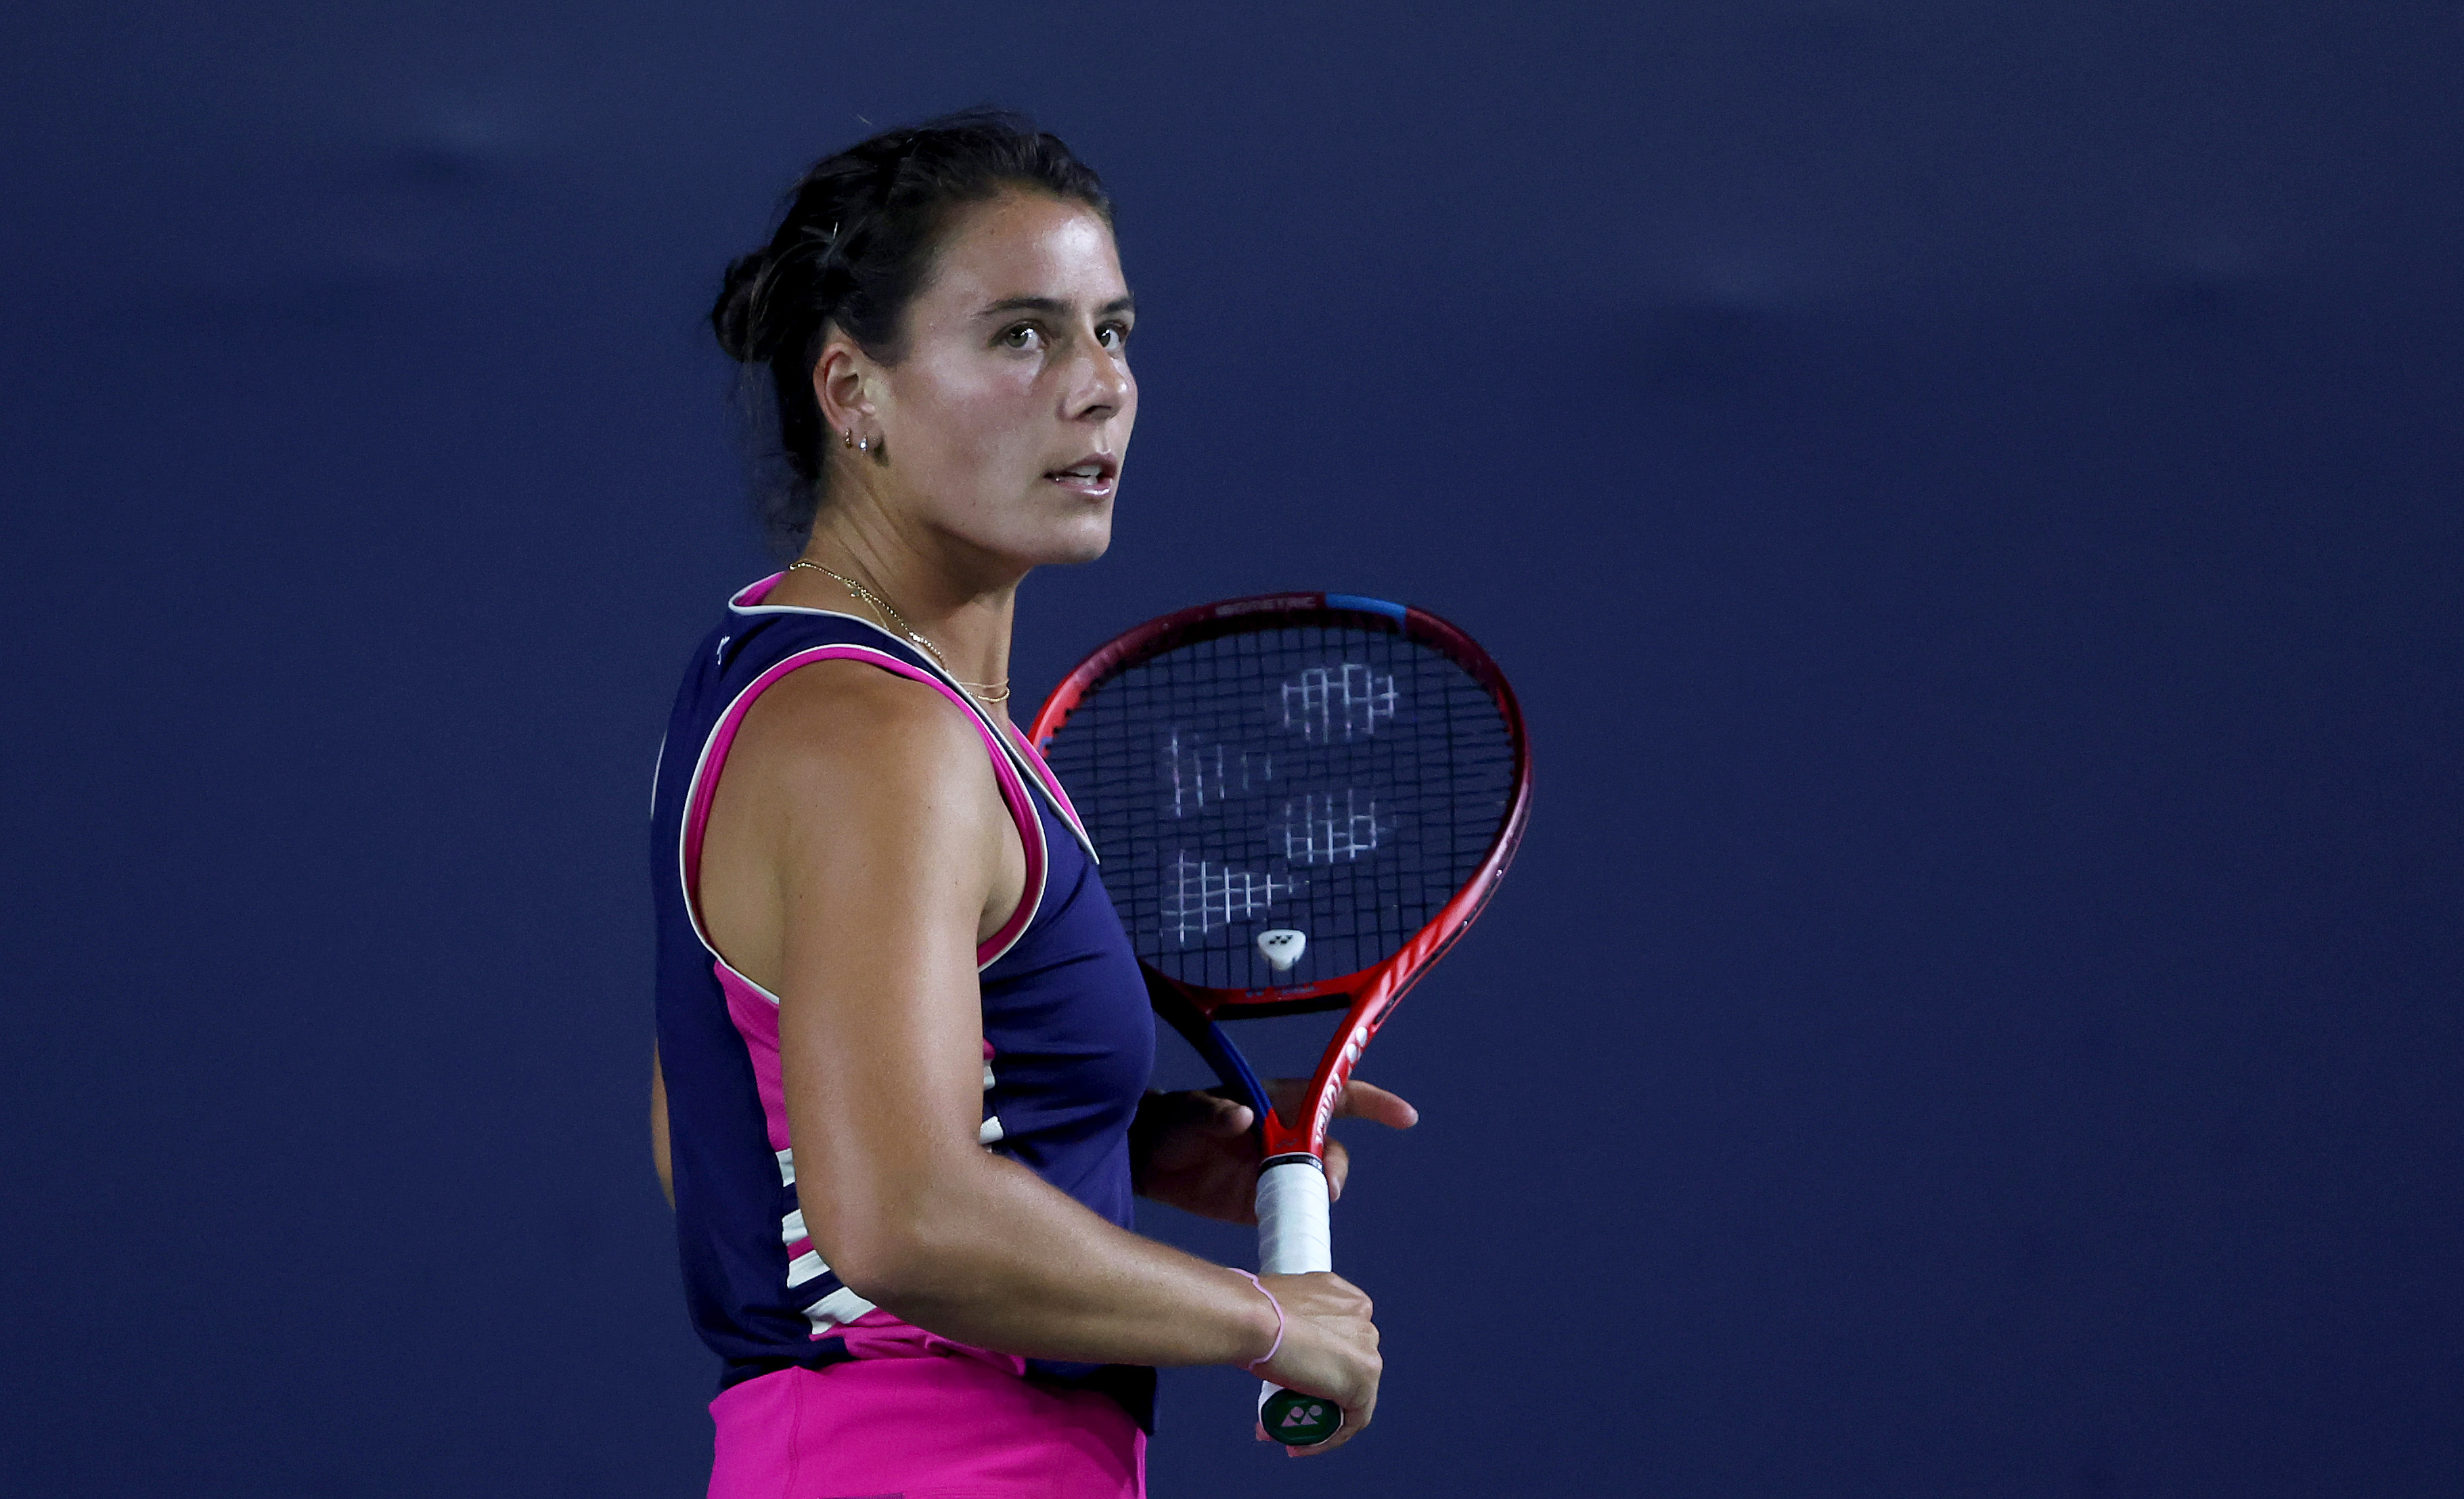 Emma Navarro ousts Maria Sakkari for first Top 10 win and San Diego semis spot